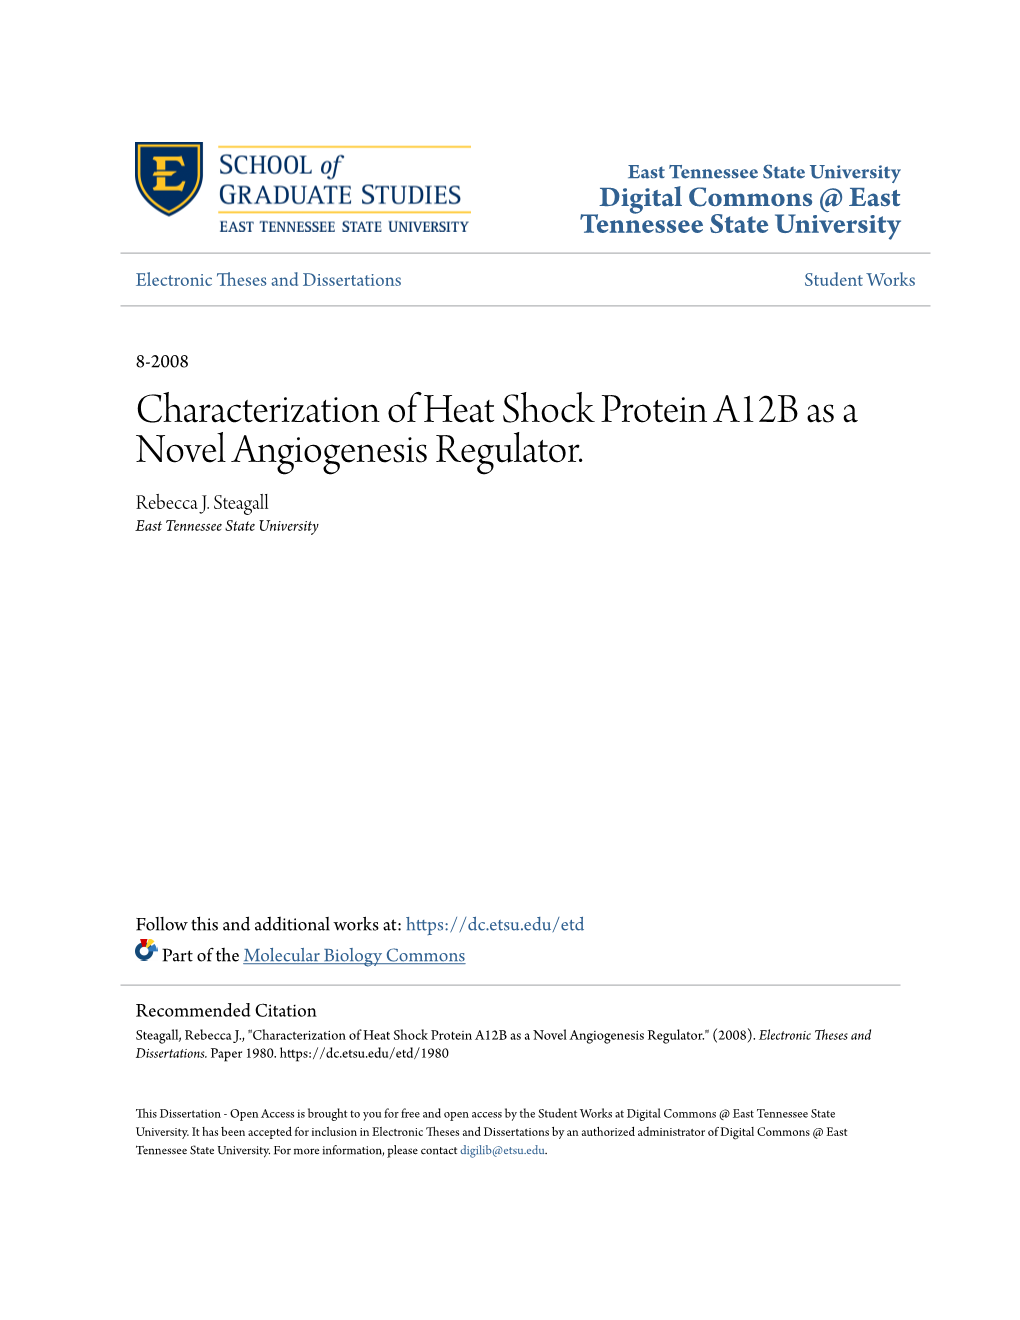 Characterization of Heat Shock Protein A12B As a Novel Angiogenesis Regulator